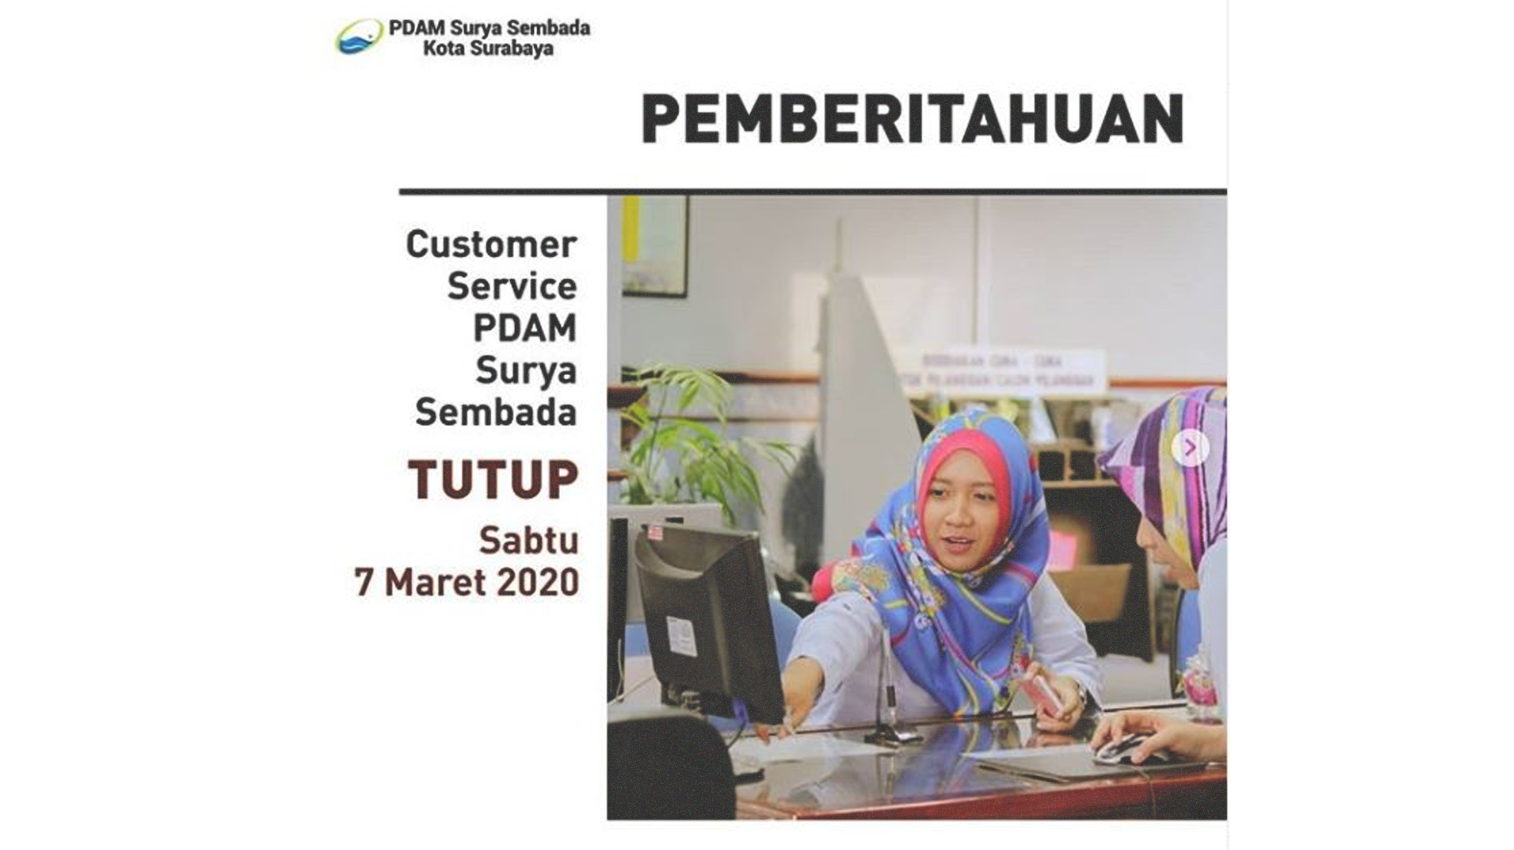 Pengumuman customer service PDAM Surya Sembada tutup, pada Sabtu 7 Maret 2020. (Foto: Instagram @pdamsuryasembada)